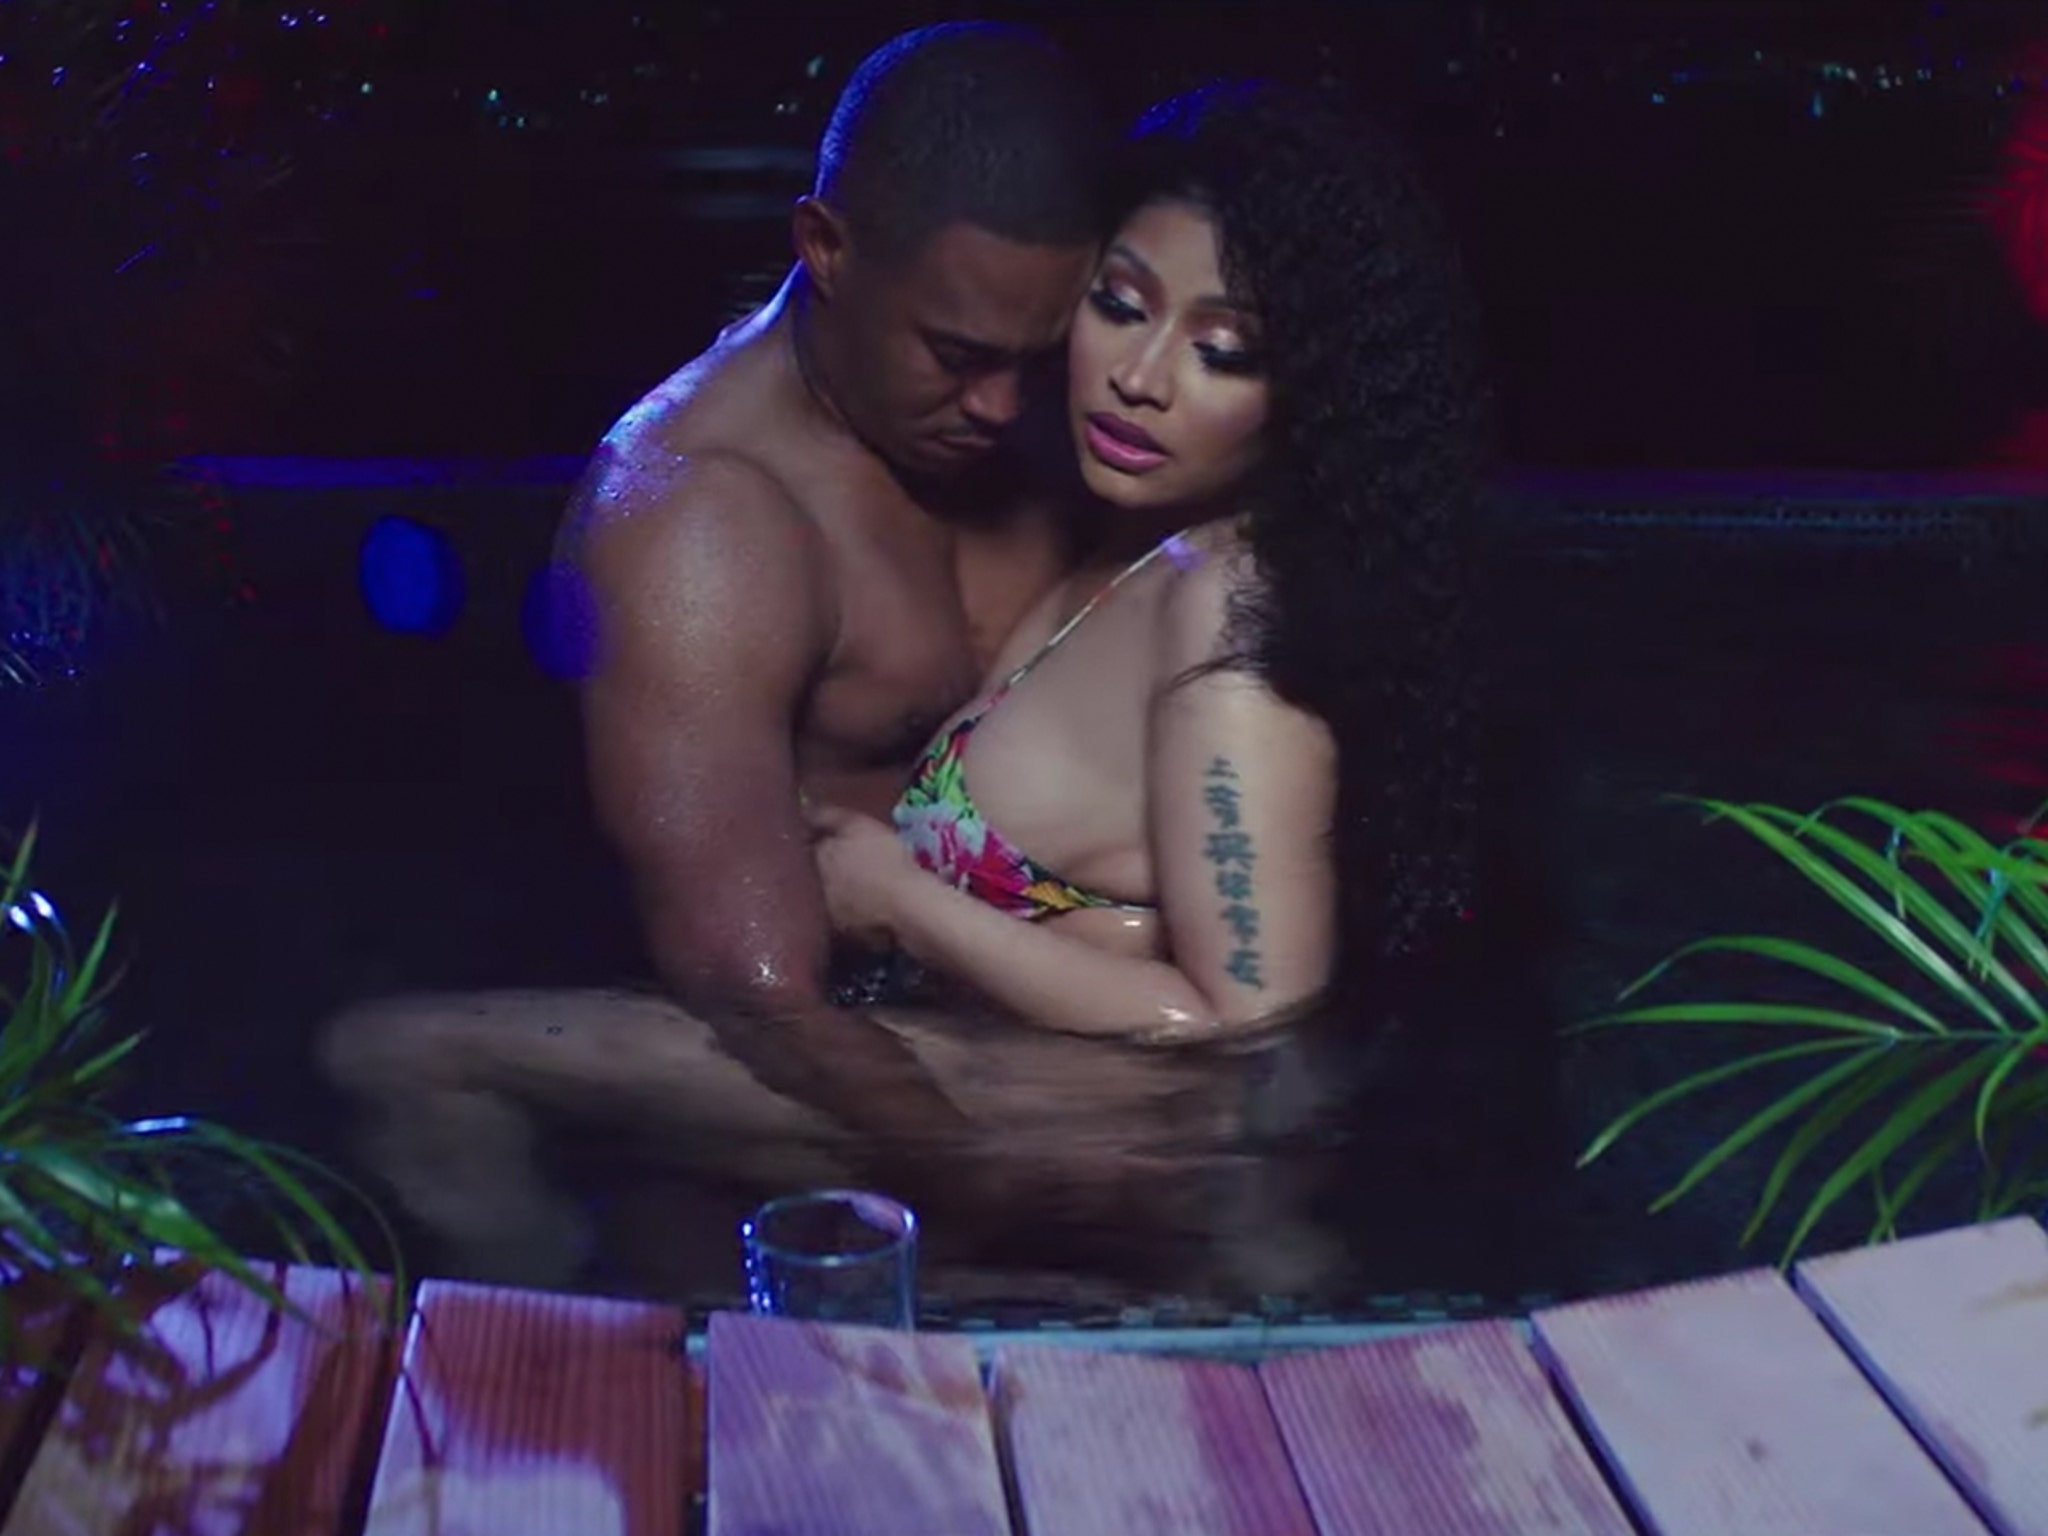 Xnxx Nicki Minaj Sex - Nicki Minaj Features Boyfriend in New Music Video 'Megatron'